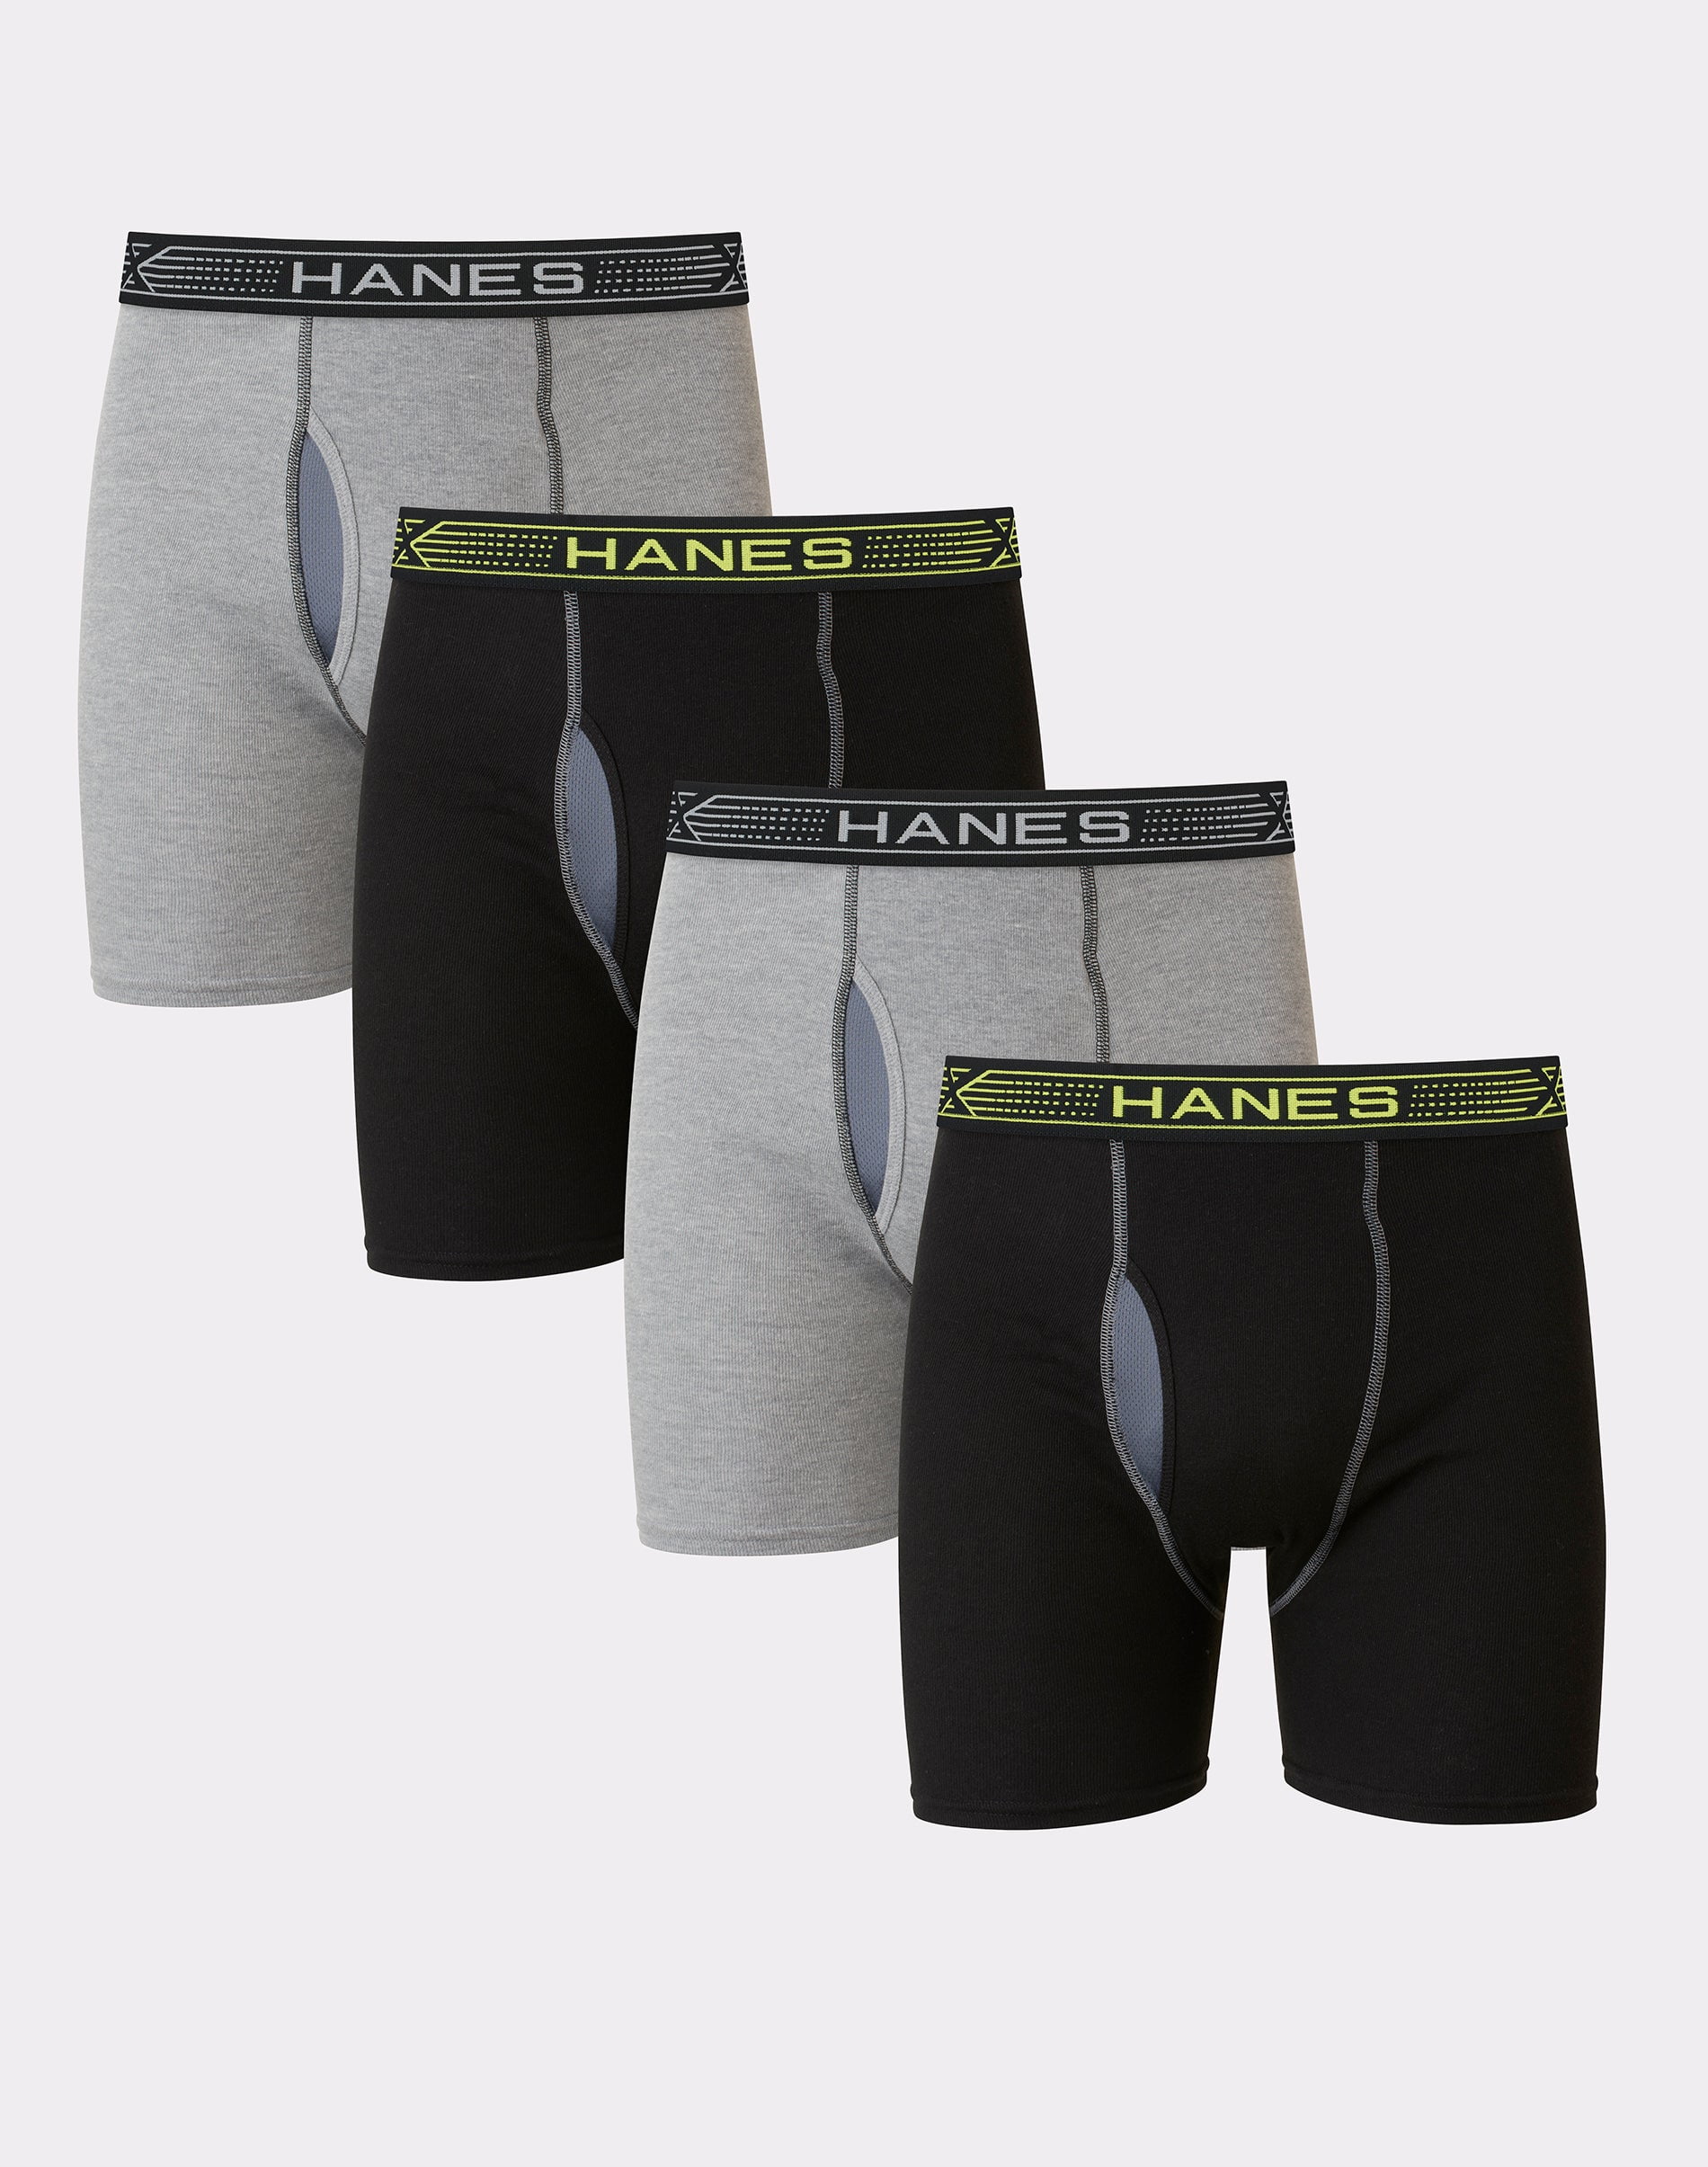 Hanes Sport X-Temp Men's Cotton Boxer Brief Underwear, Black/Grey